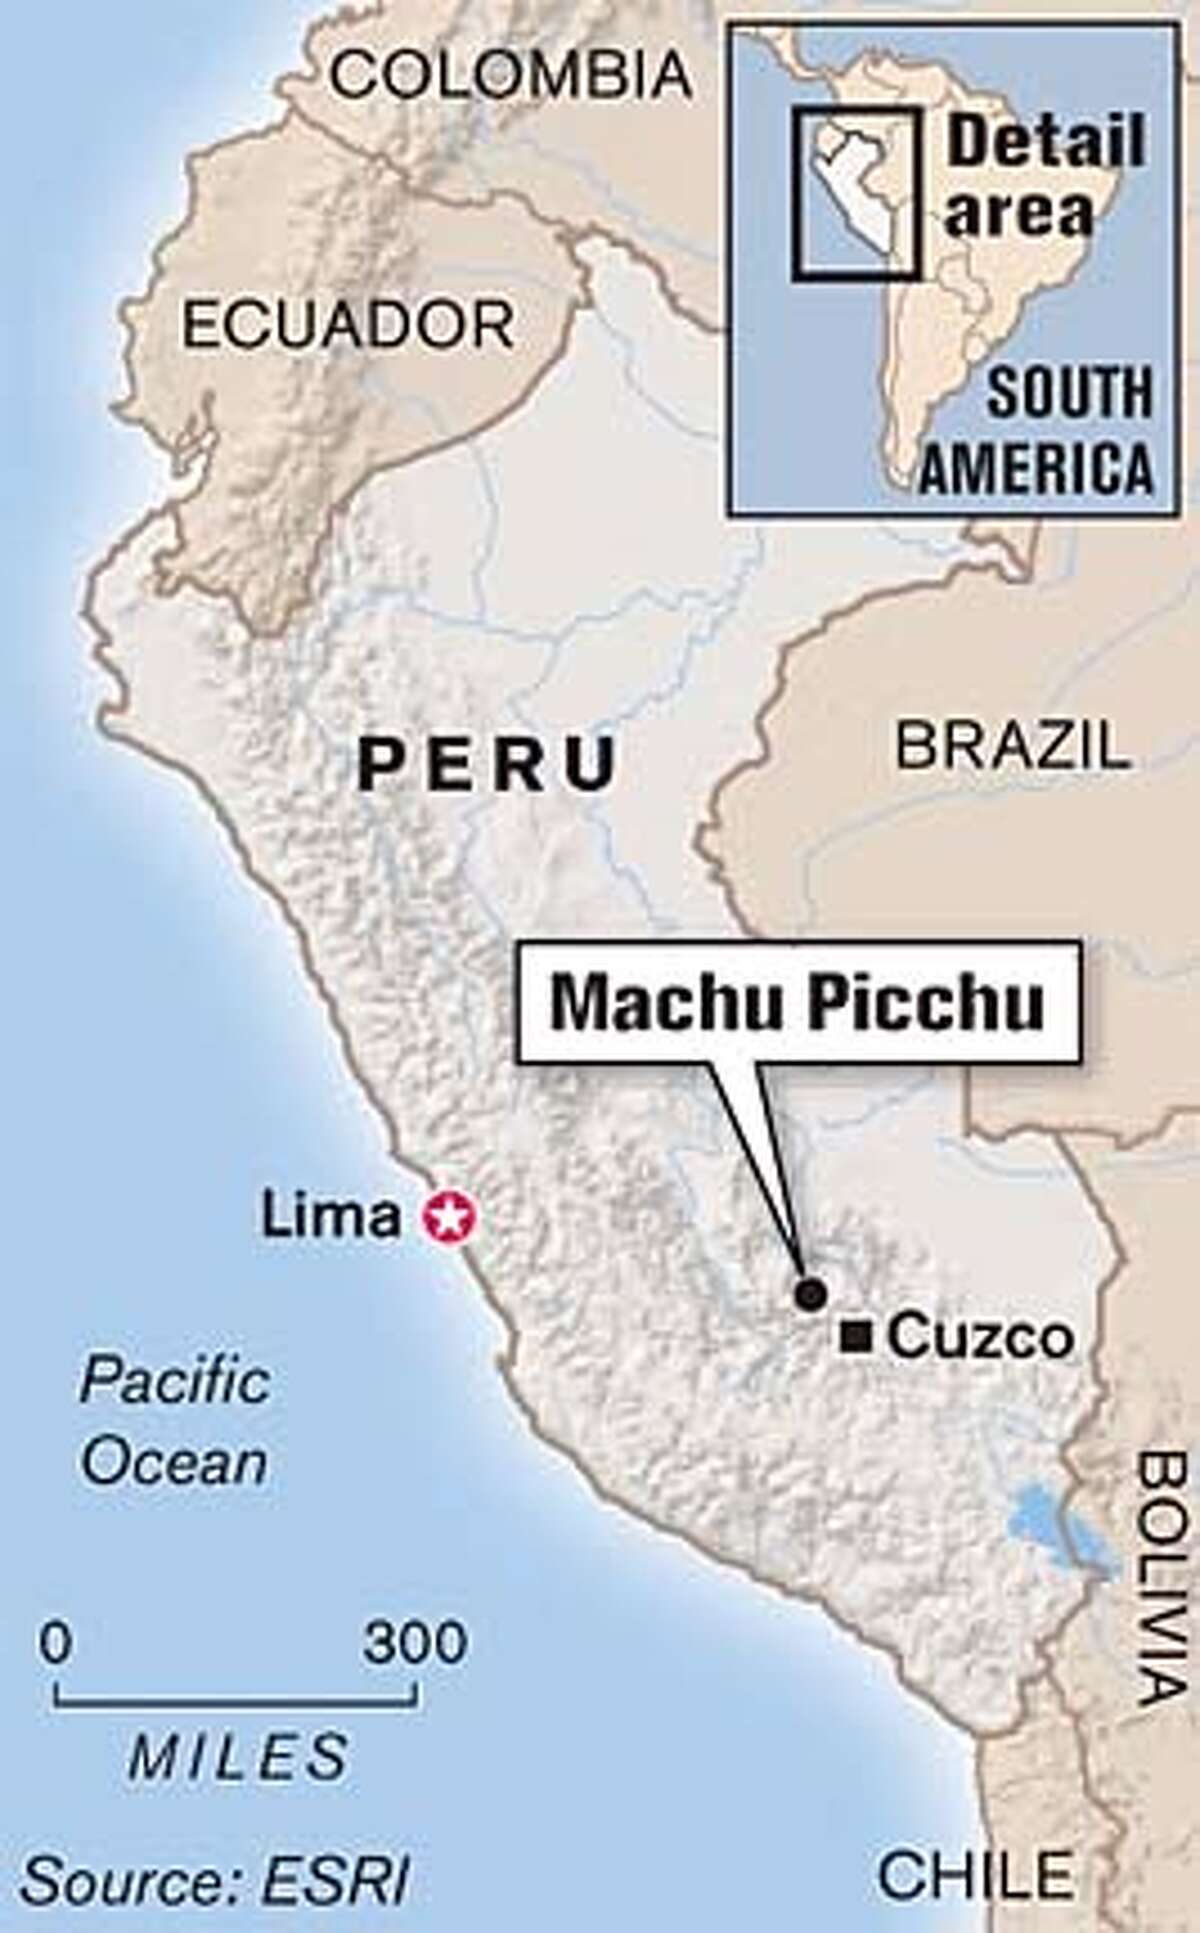 Taking road less traveled to Machu Picchu